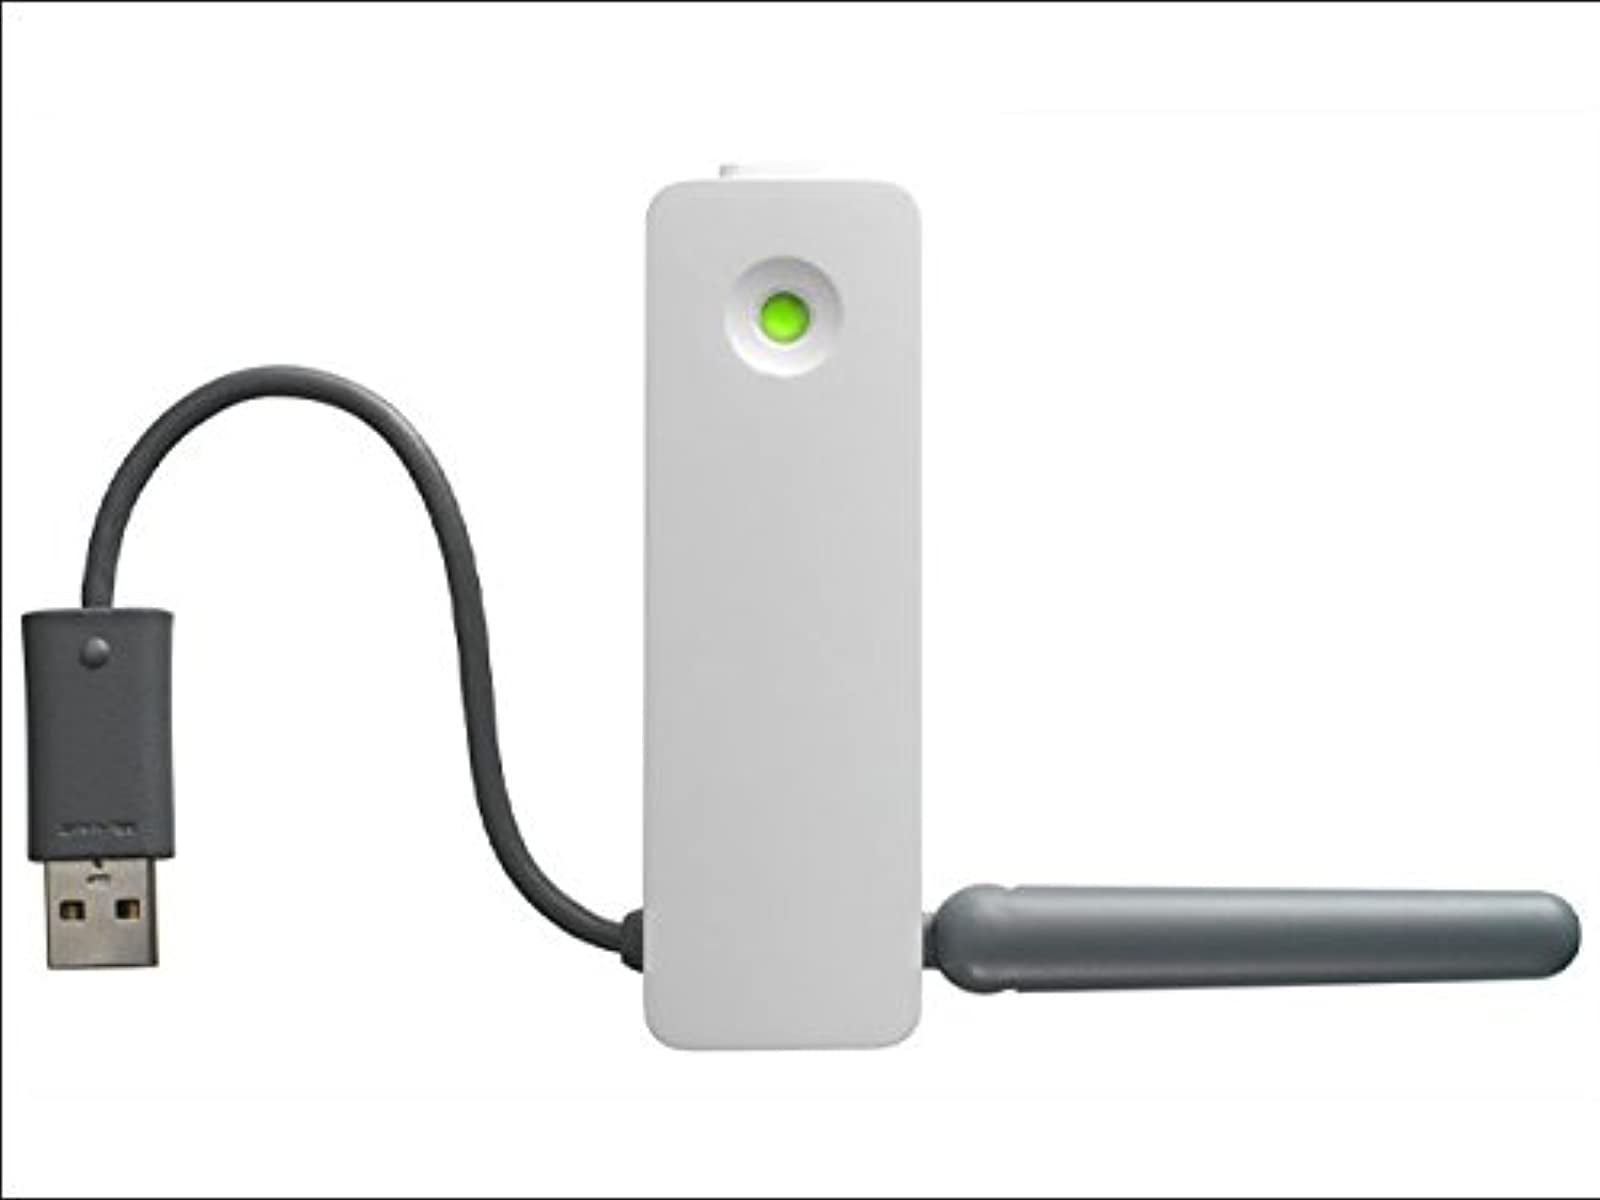 Restored Microsoft Xbox 360 Wireless a/b/g Network Adapter (Refurbished) 